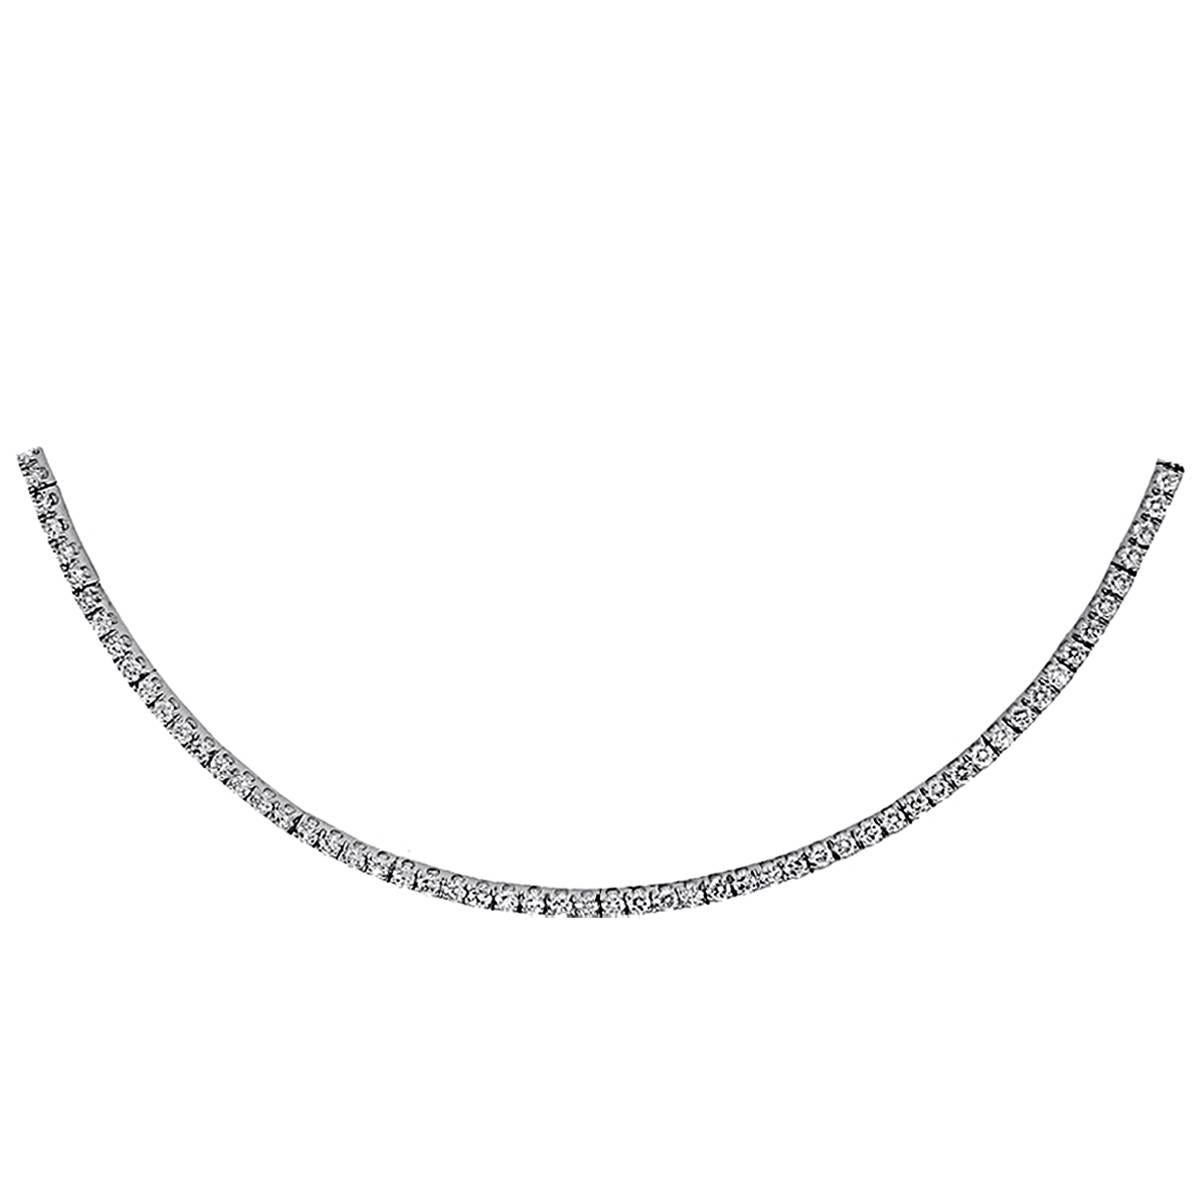 4.40 Carat Diamond Tennis Necklace